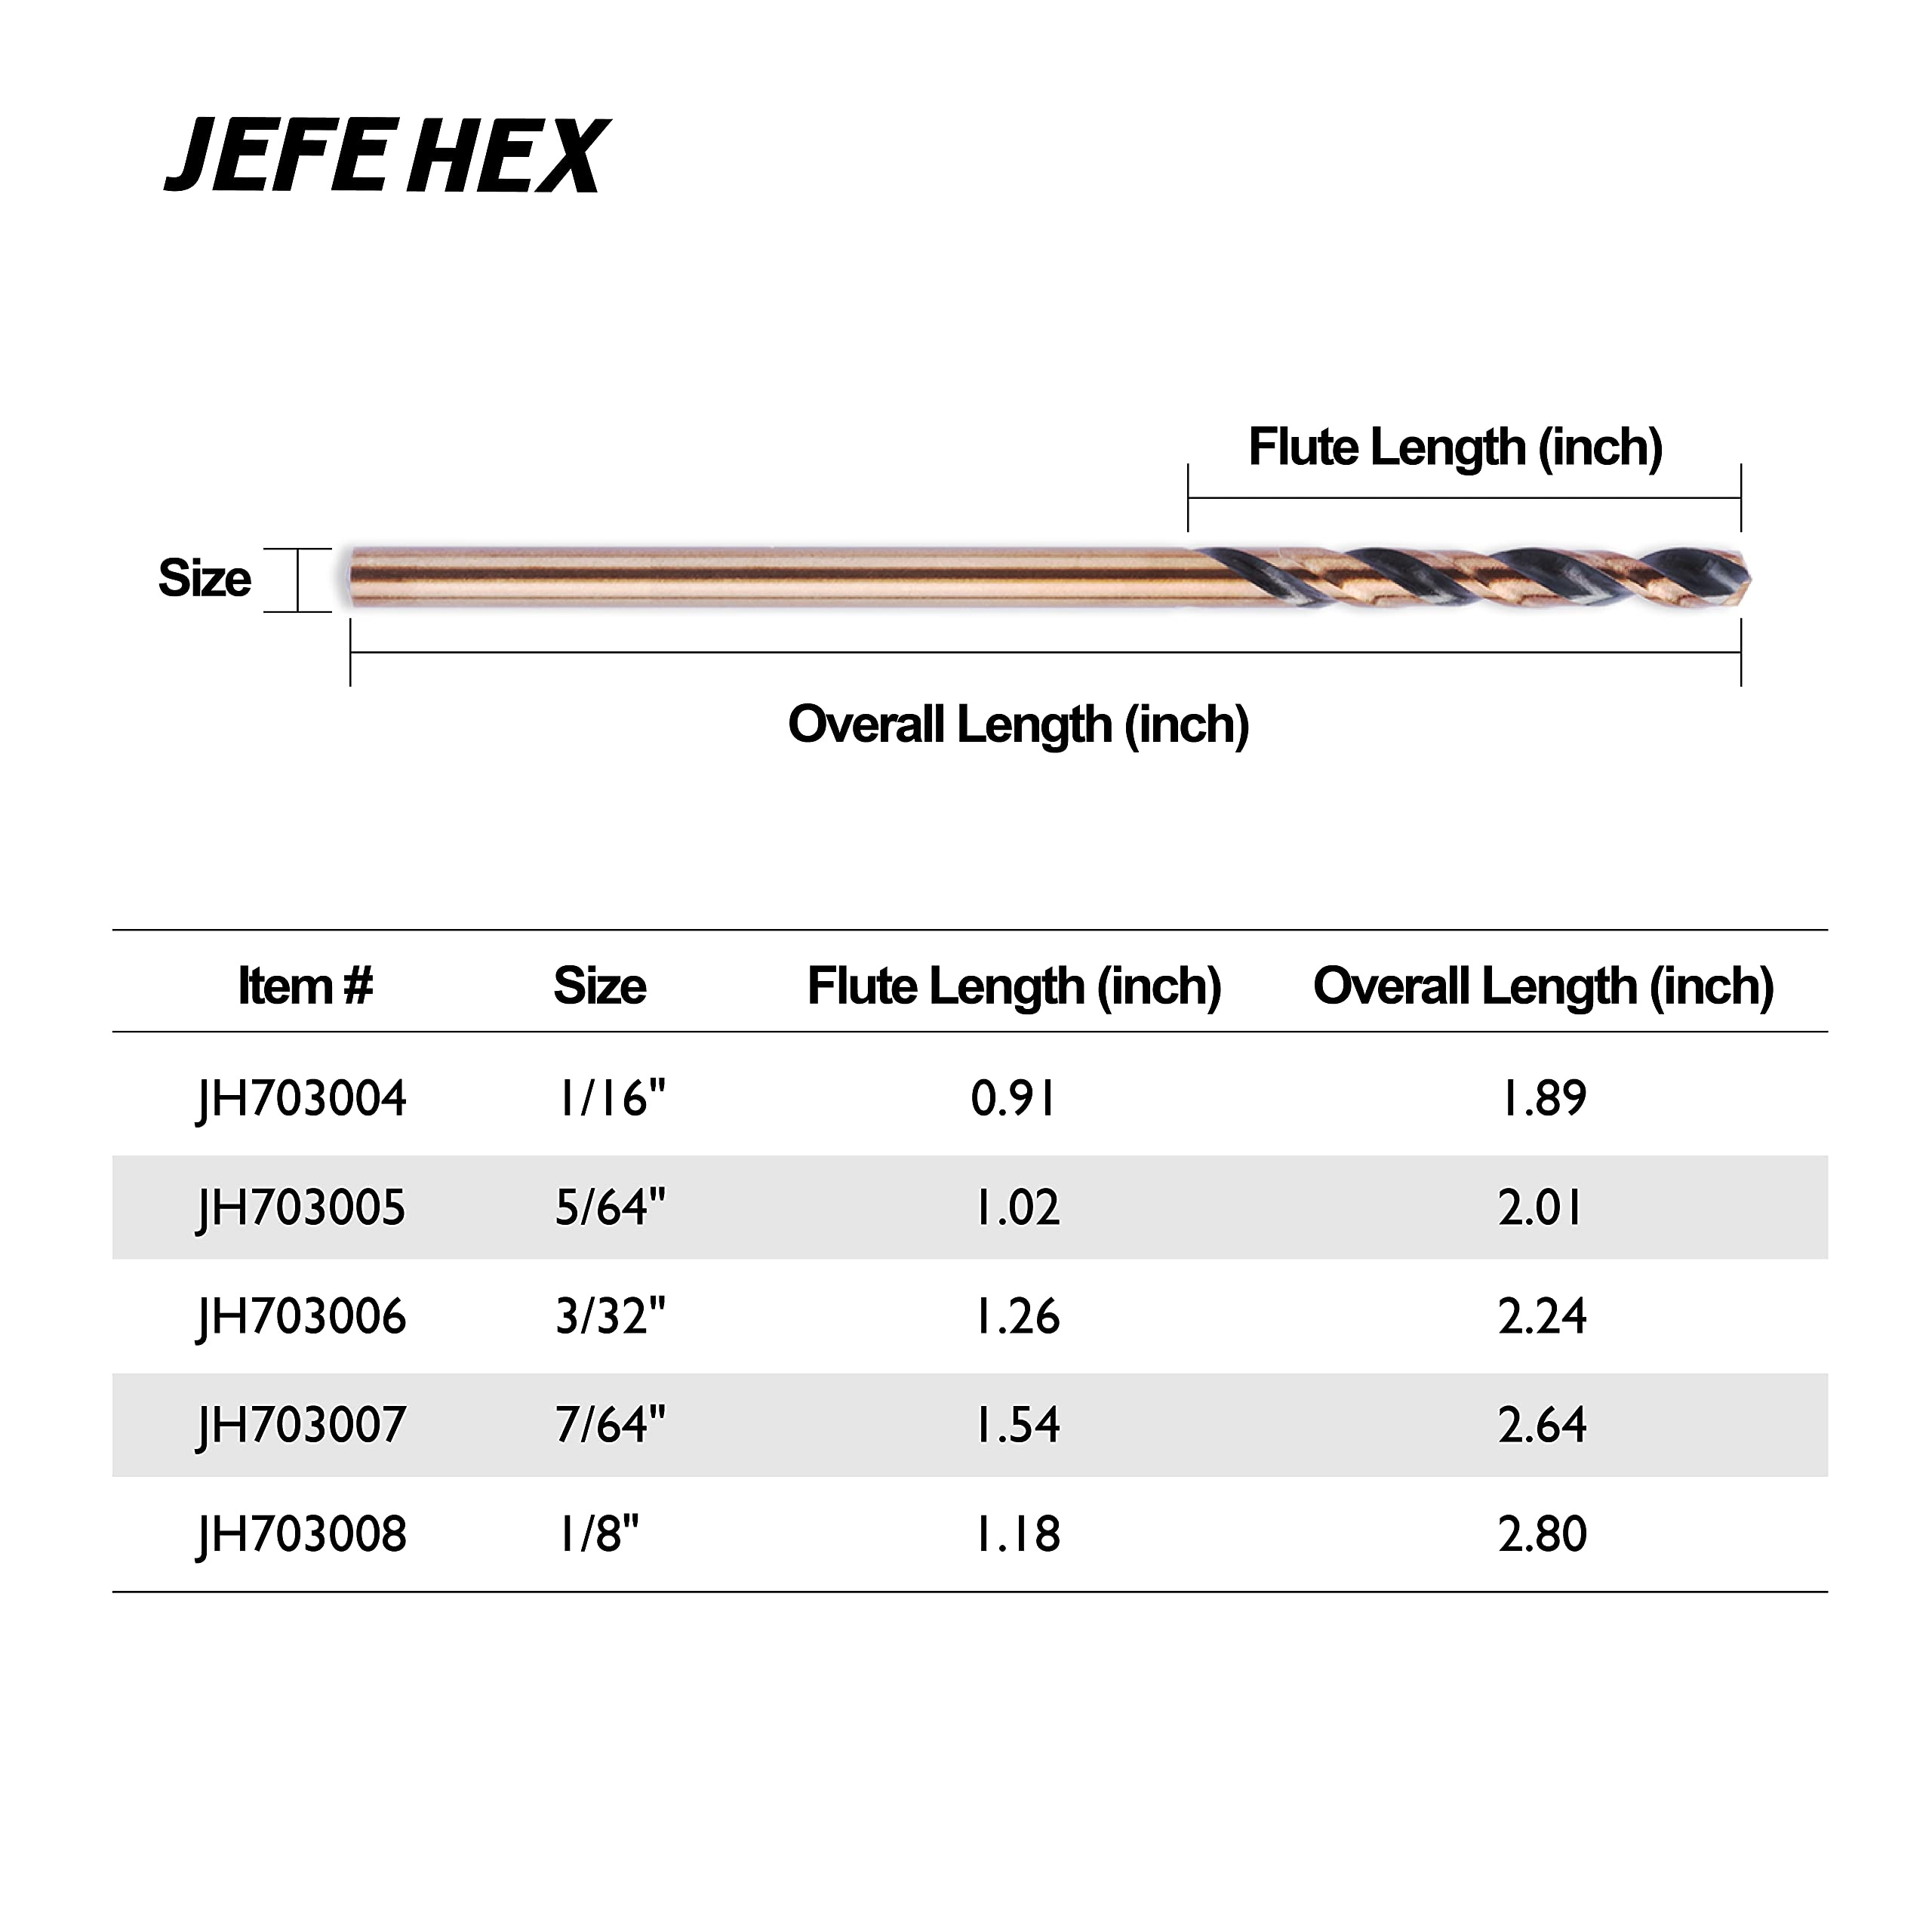 JEFE HEX 1/8" HSS Twist Drill Bit for Steel/Copper/Aluminum/Zinc Alloy/Wood/Plastics, General Purpose HSS Drill bit, 135 Degree Split Point, Ideal for DIY Projects and Home Maintenance. (6-Piece)